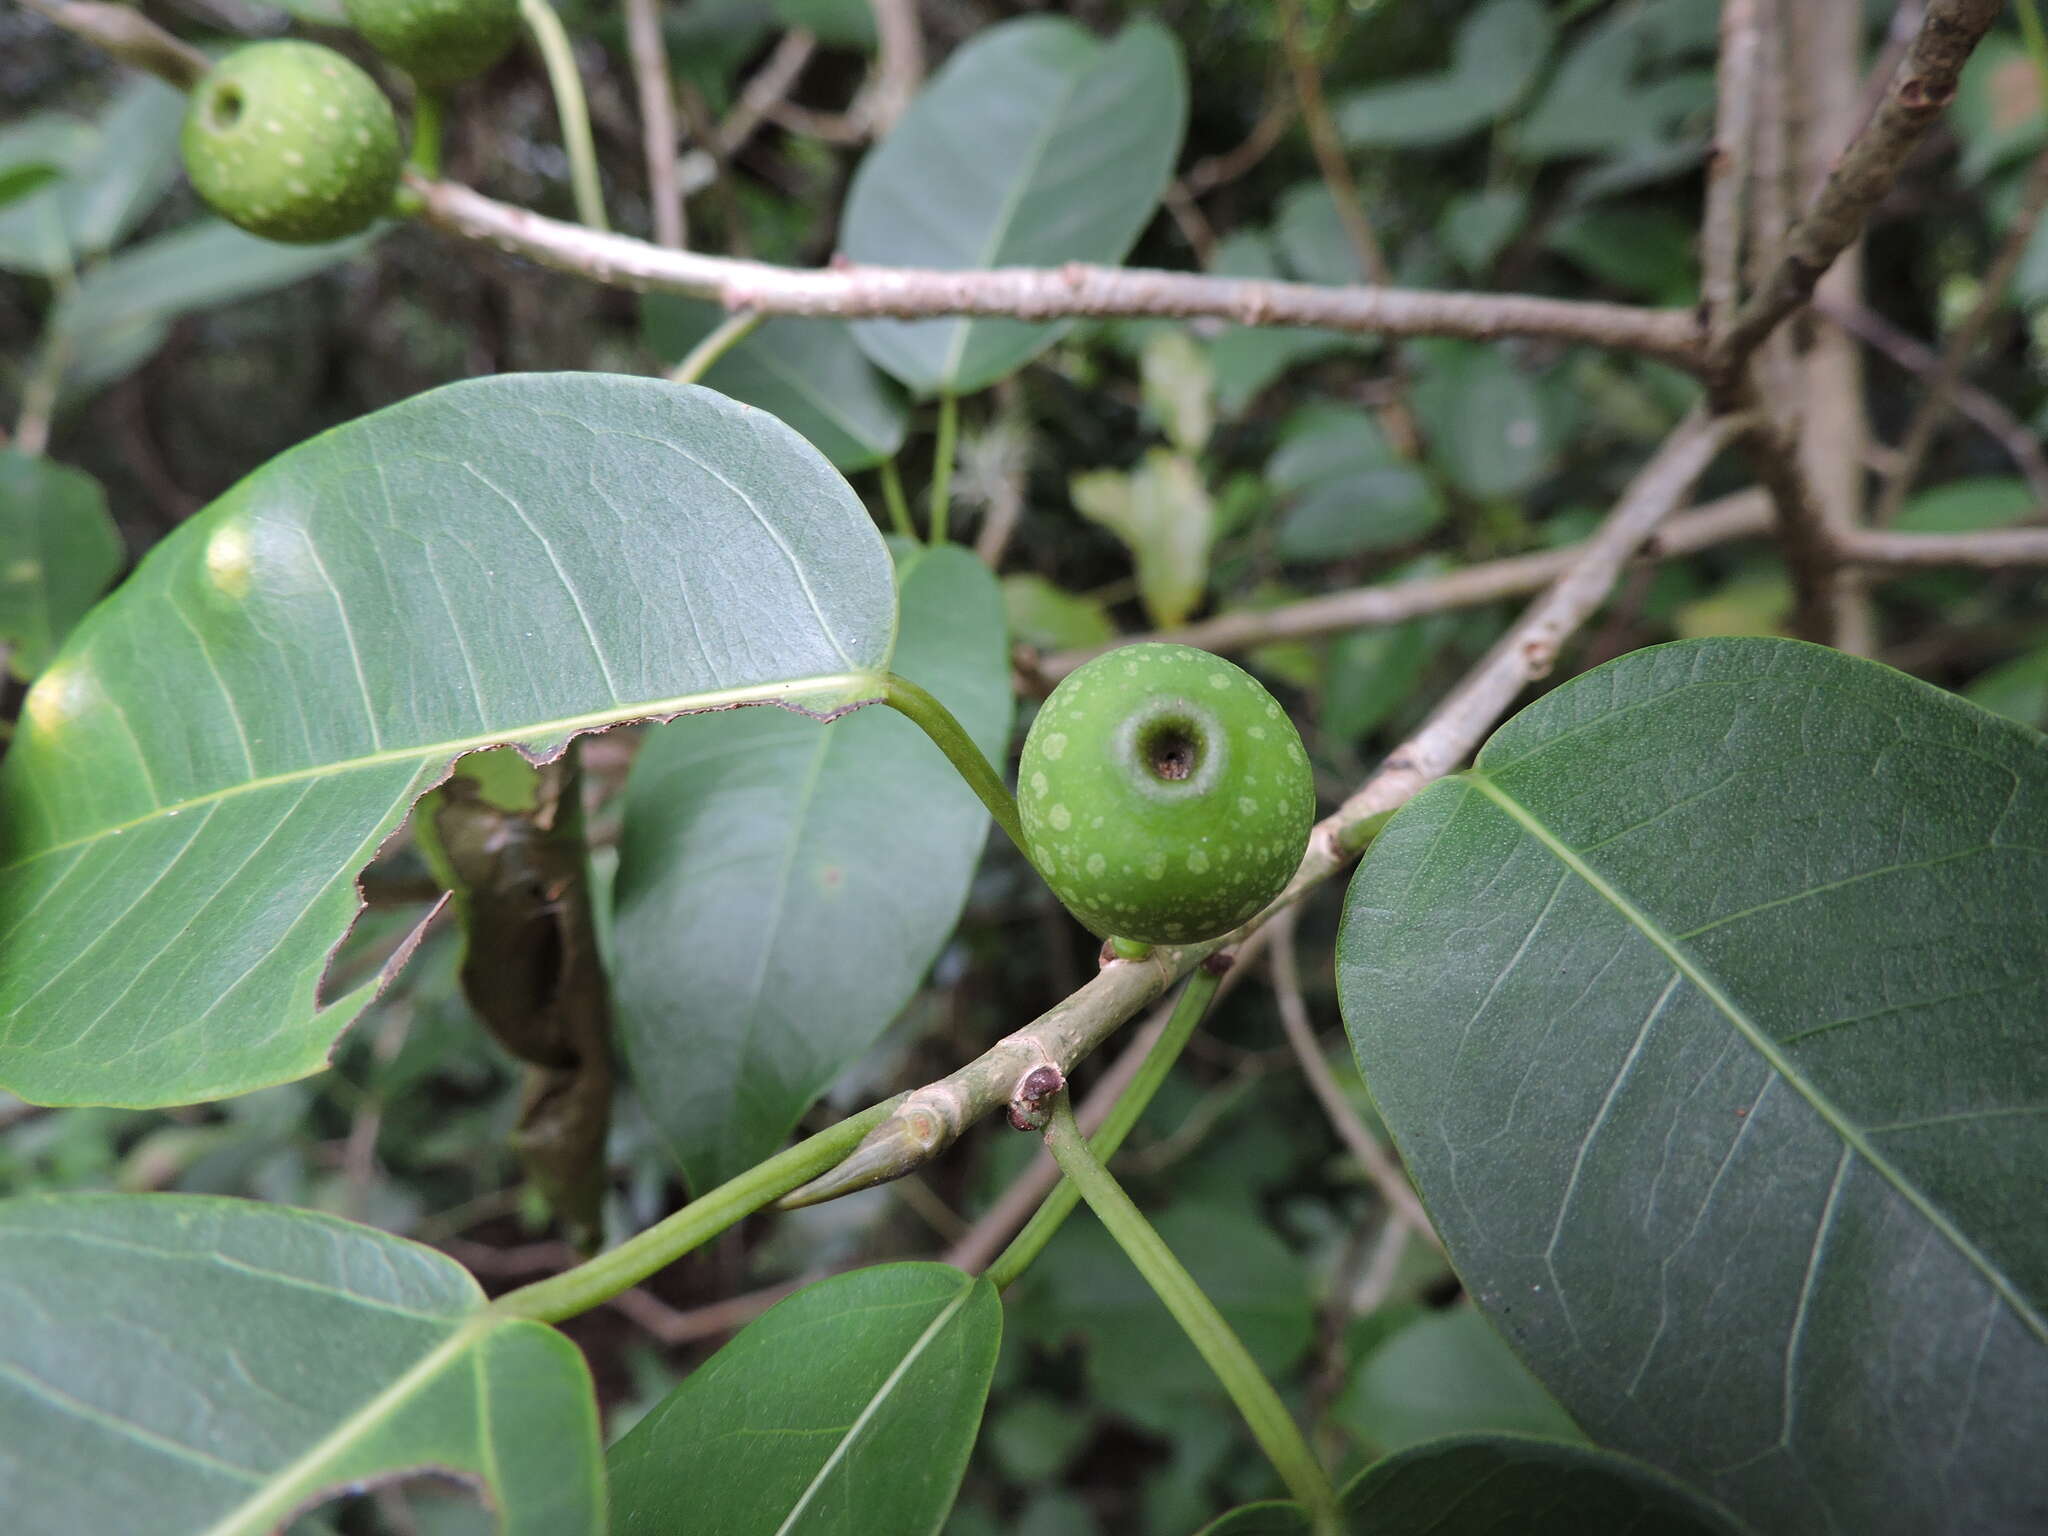 Image of Ficus arpazusa Casar.